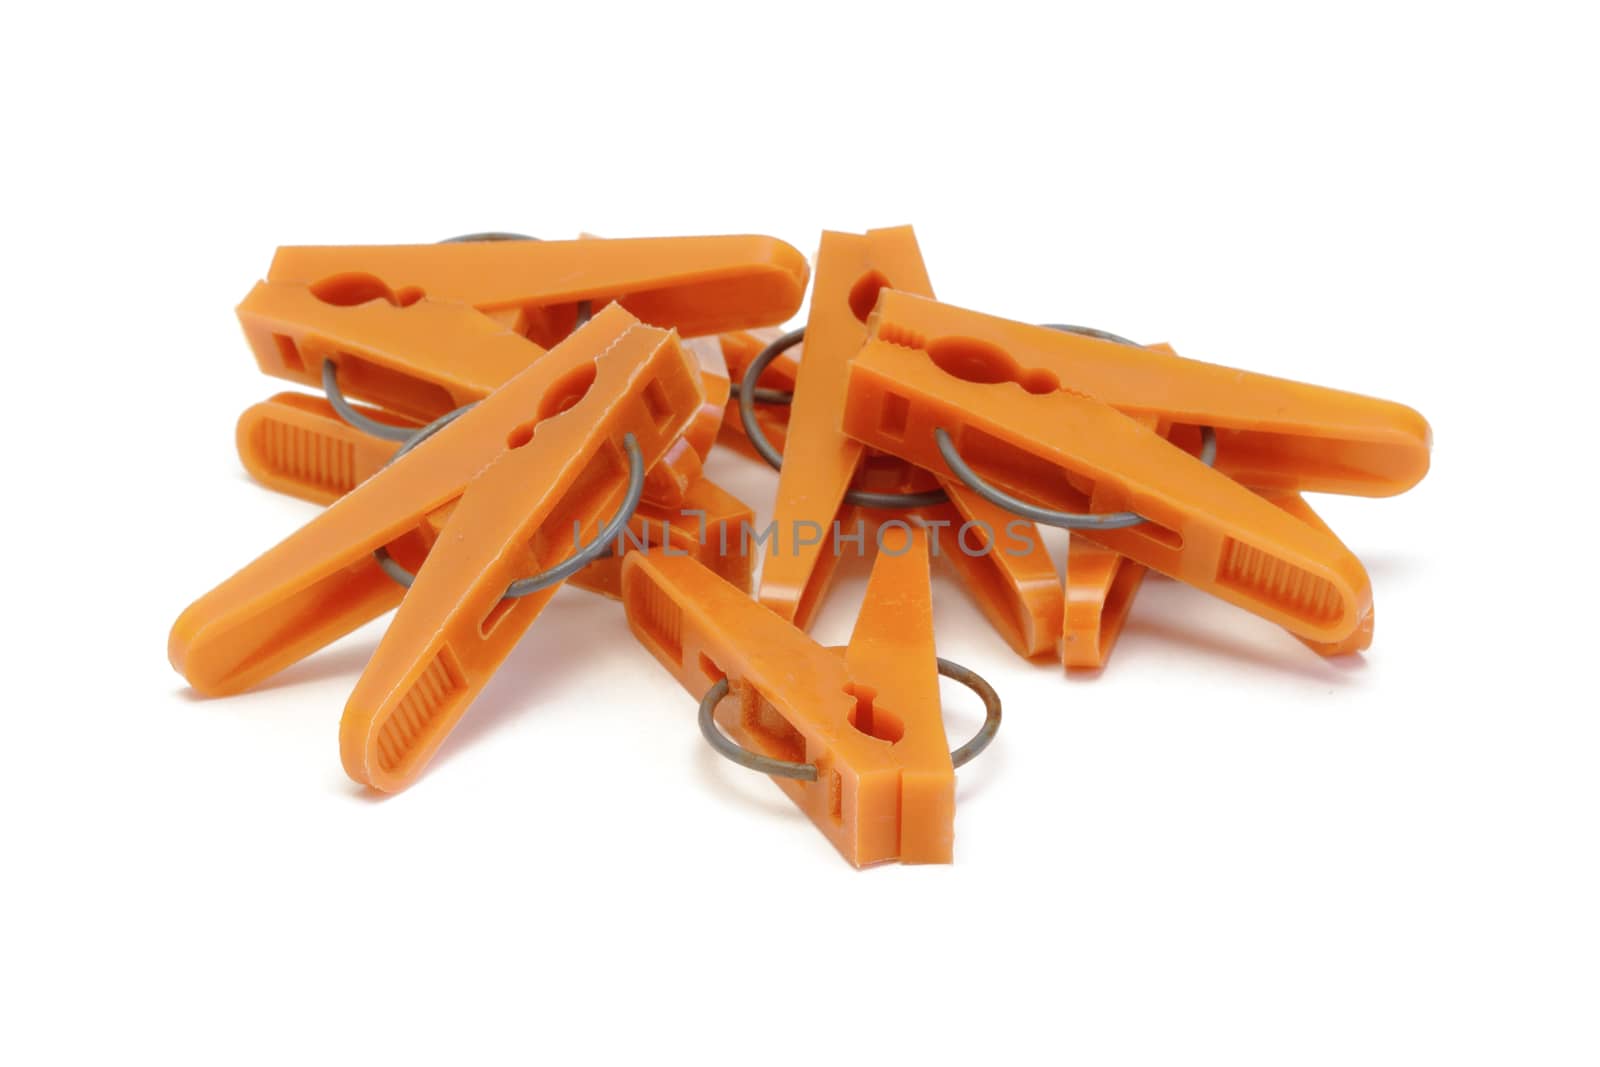 Orange plastic clothespins by marslander